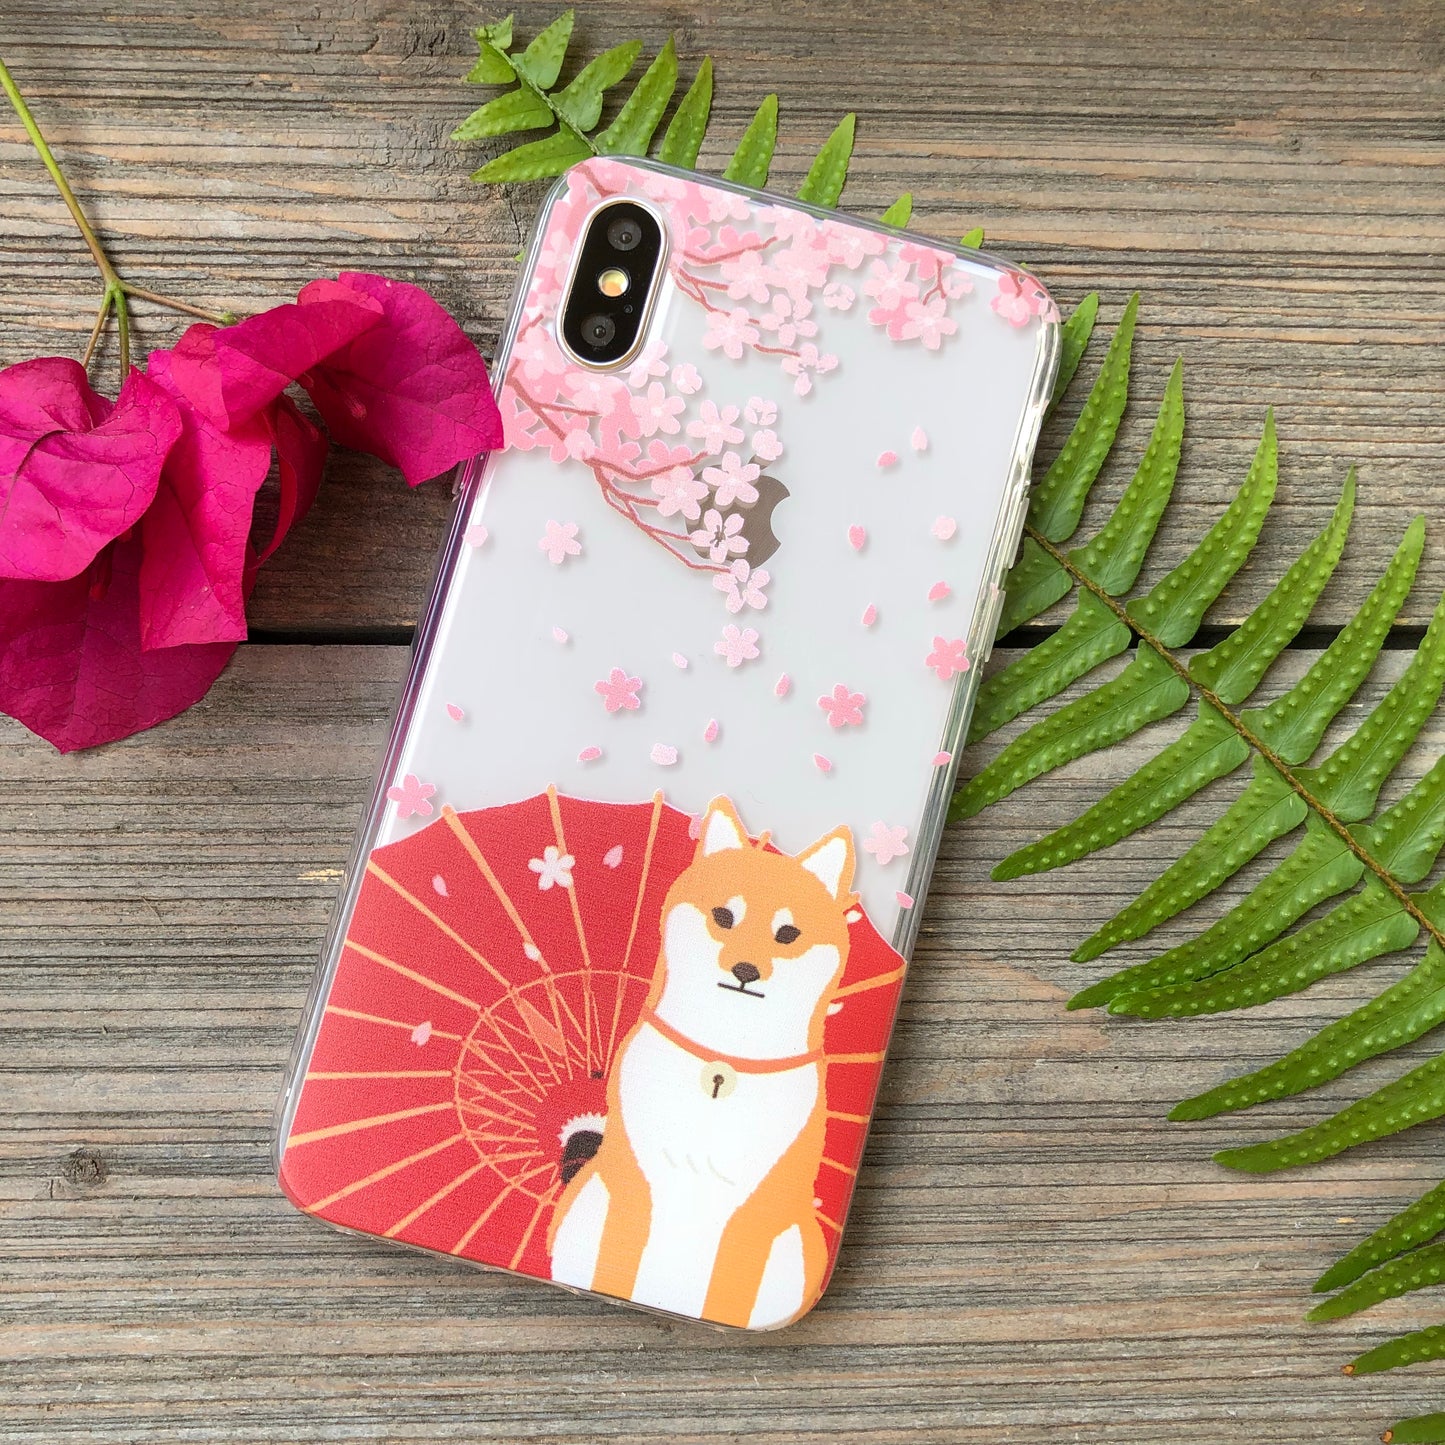 sakura blossoms and shiba inu phone case